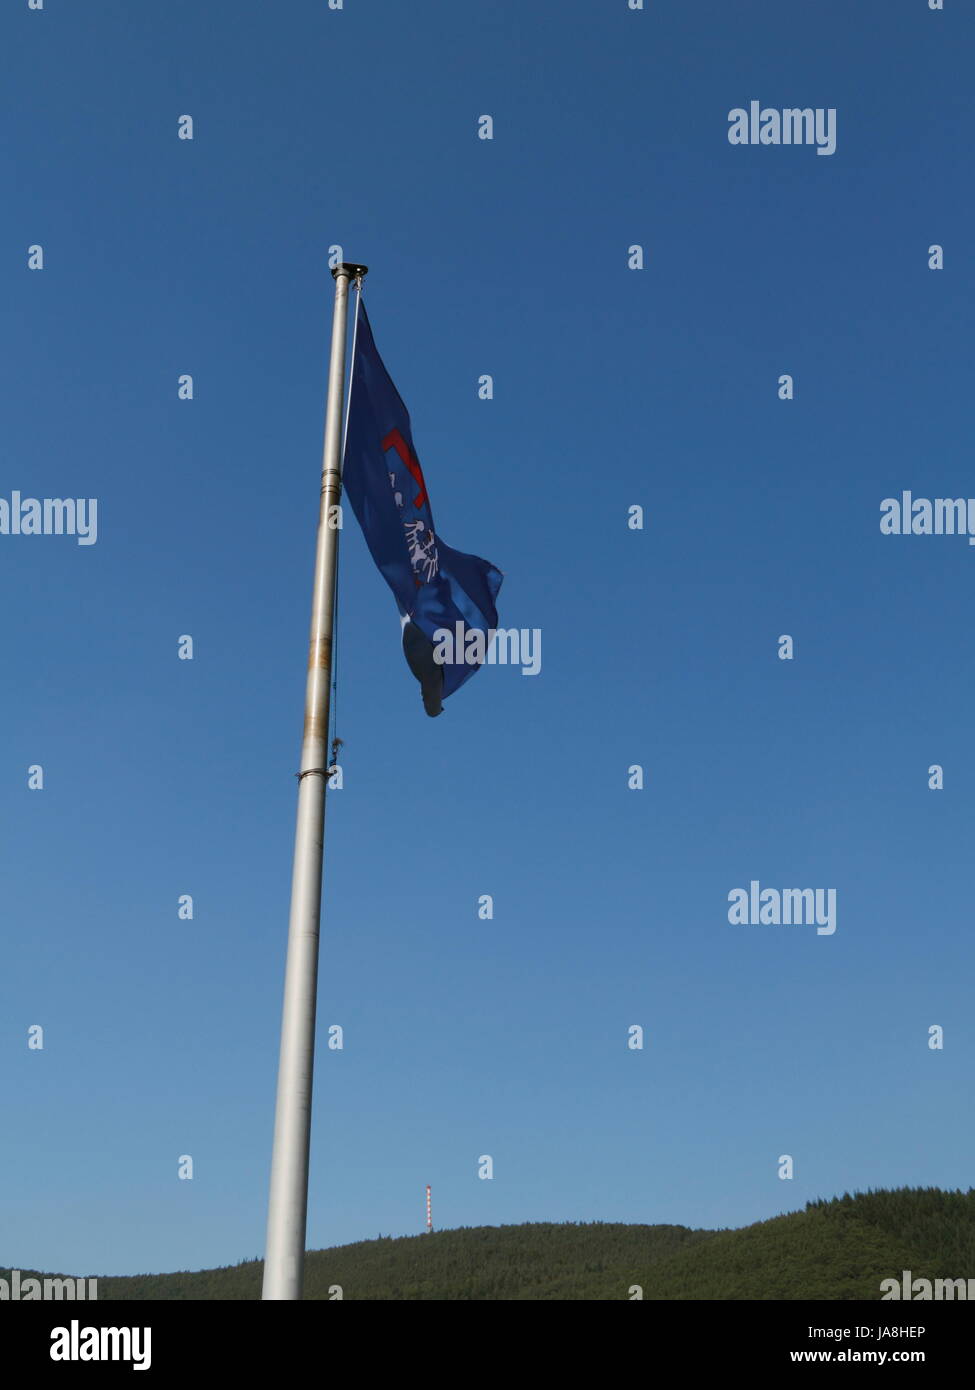 Bandiera, montante, flutter, simbologia, Flagstaff, blu, bianco, europeo, caucasico Foto Stock